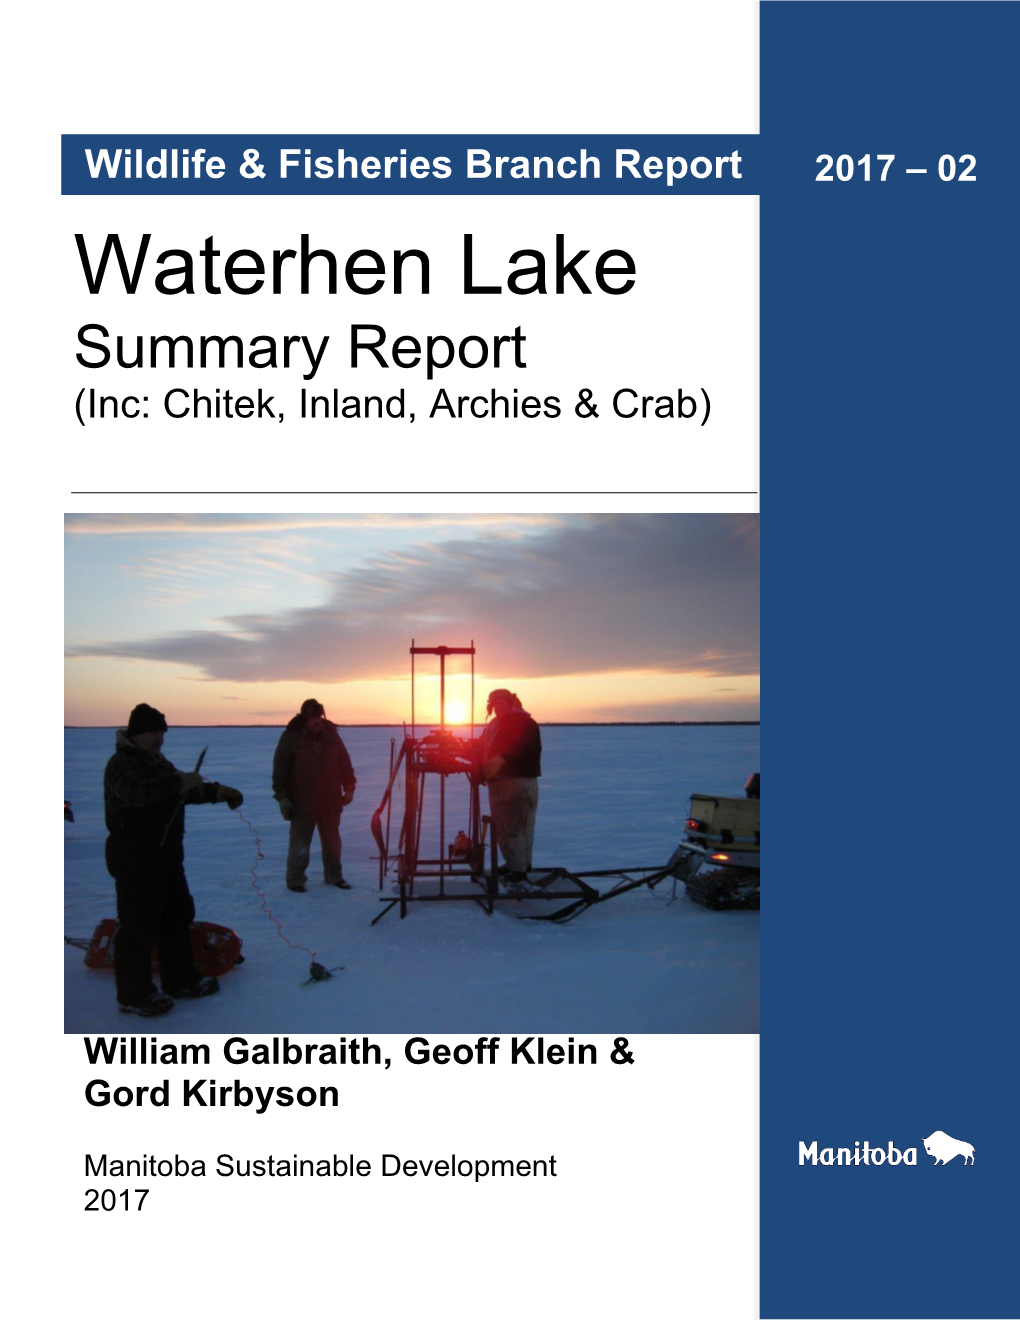 WATERHEN LAKE (Inc: Chitek, Inland, Archie & Crab) Summary Report